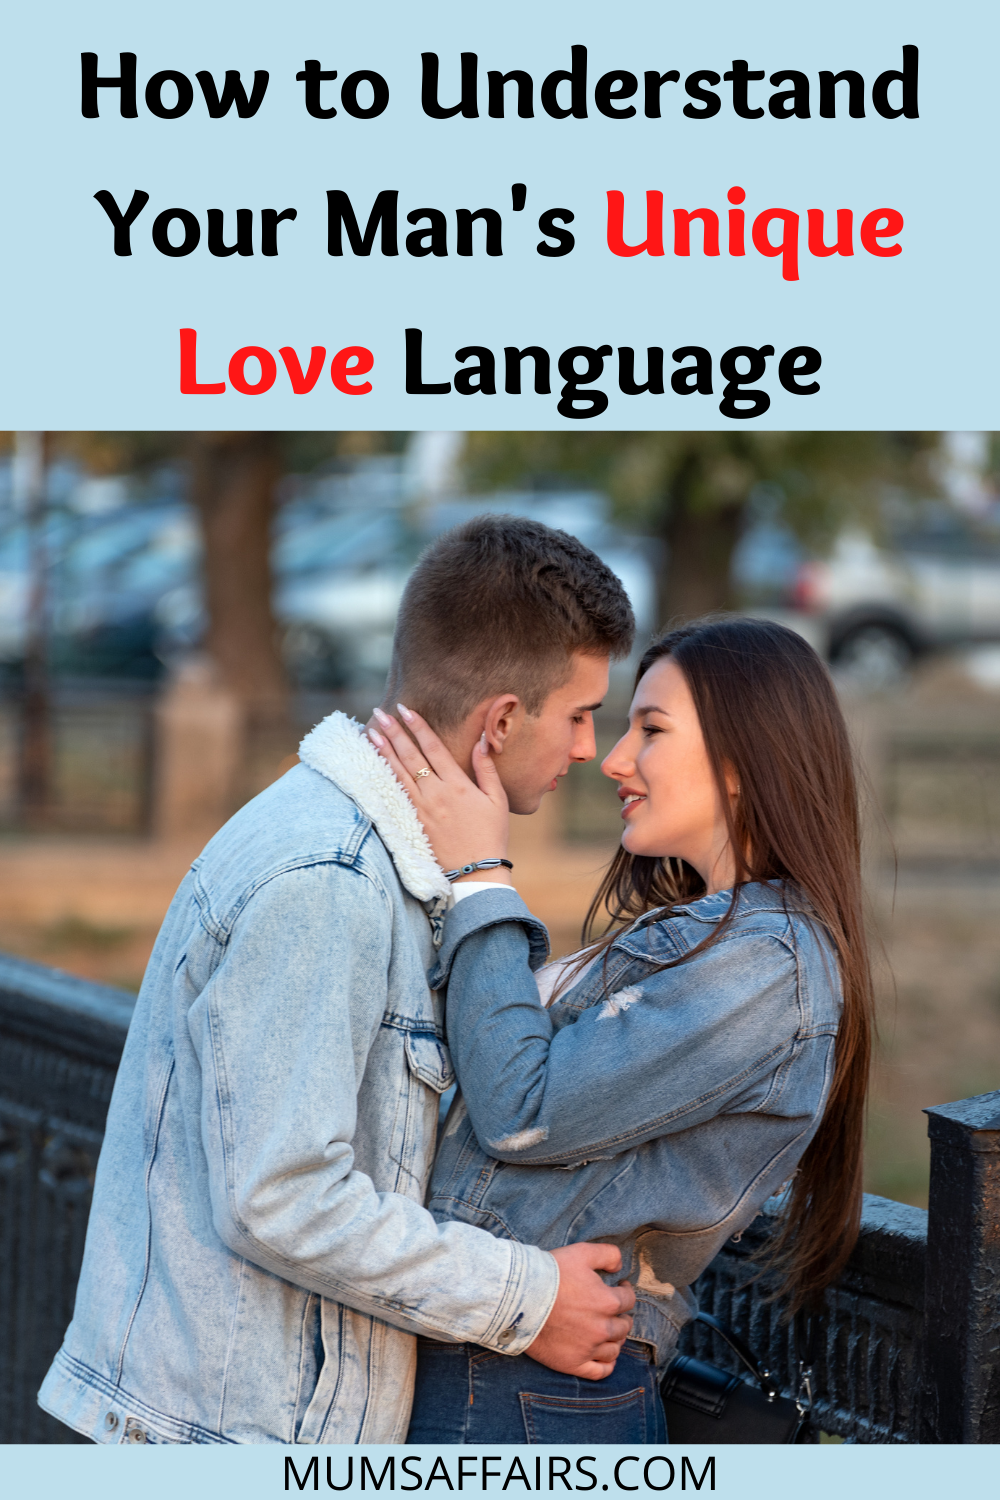 signs of Unique Love Language